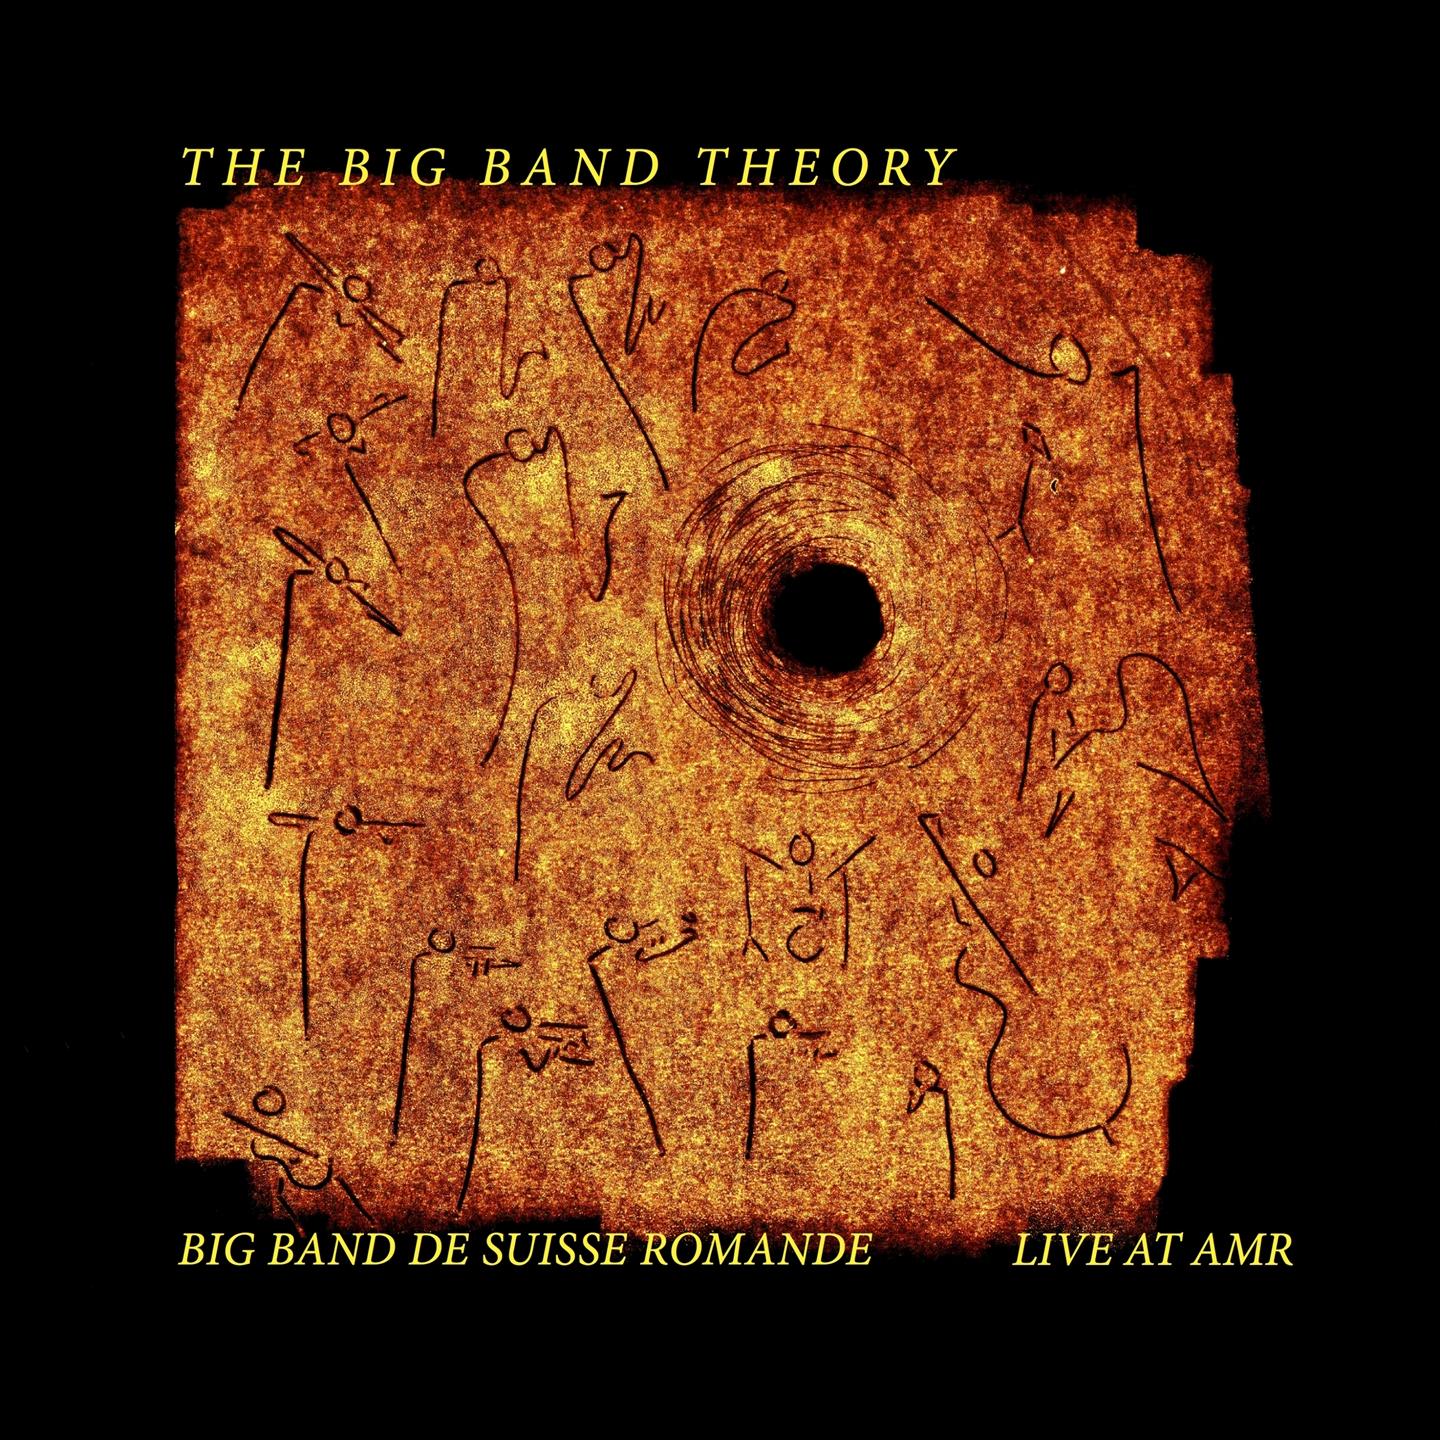 Big Band De Suisse Romande - The Big Band Theory - Photo 1/1